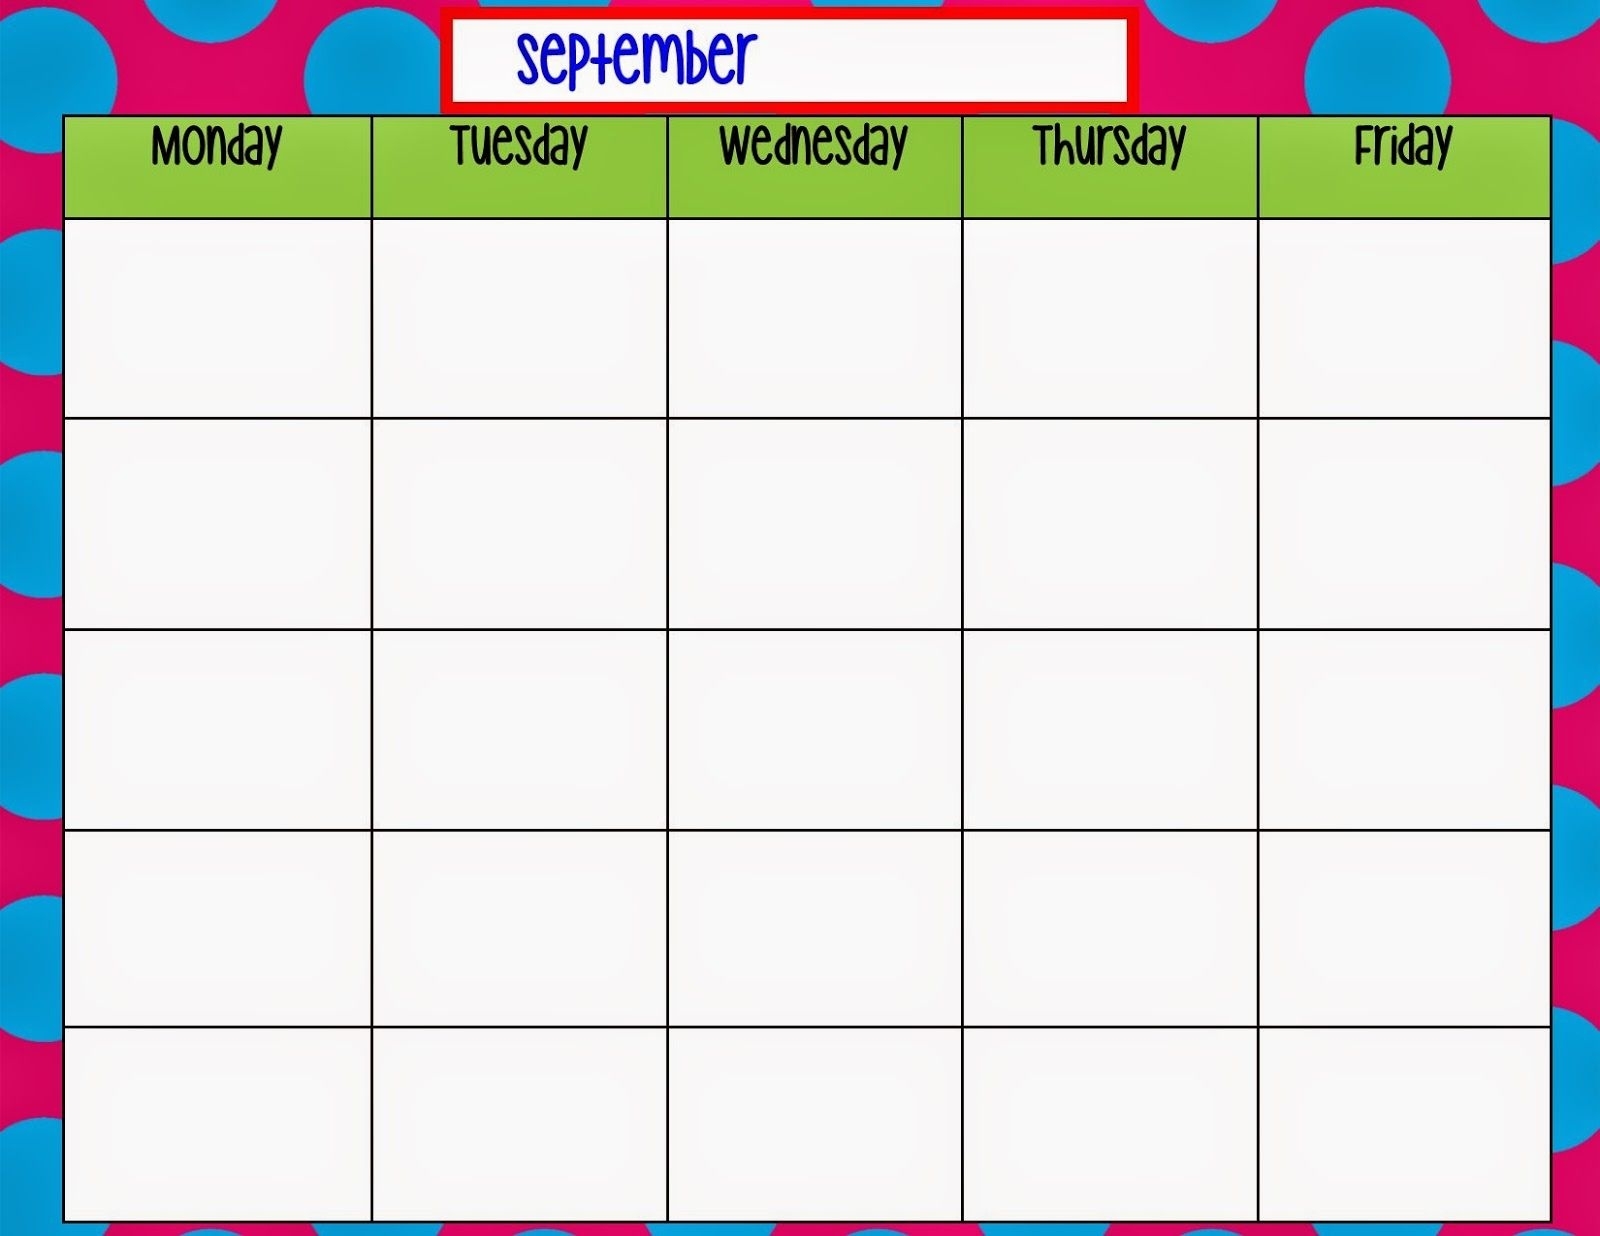 Monday Through Friday Calendar Template | Preschool | Pinterest  Blank Weekly Monday Through Friday Calendar Template